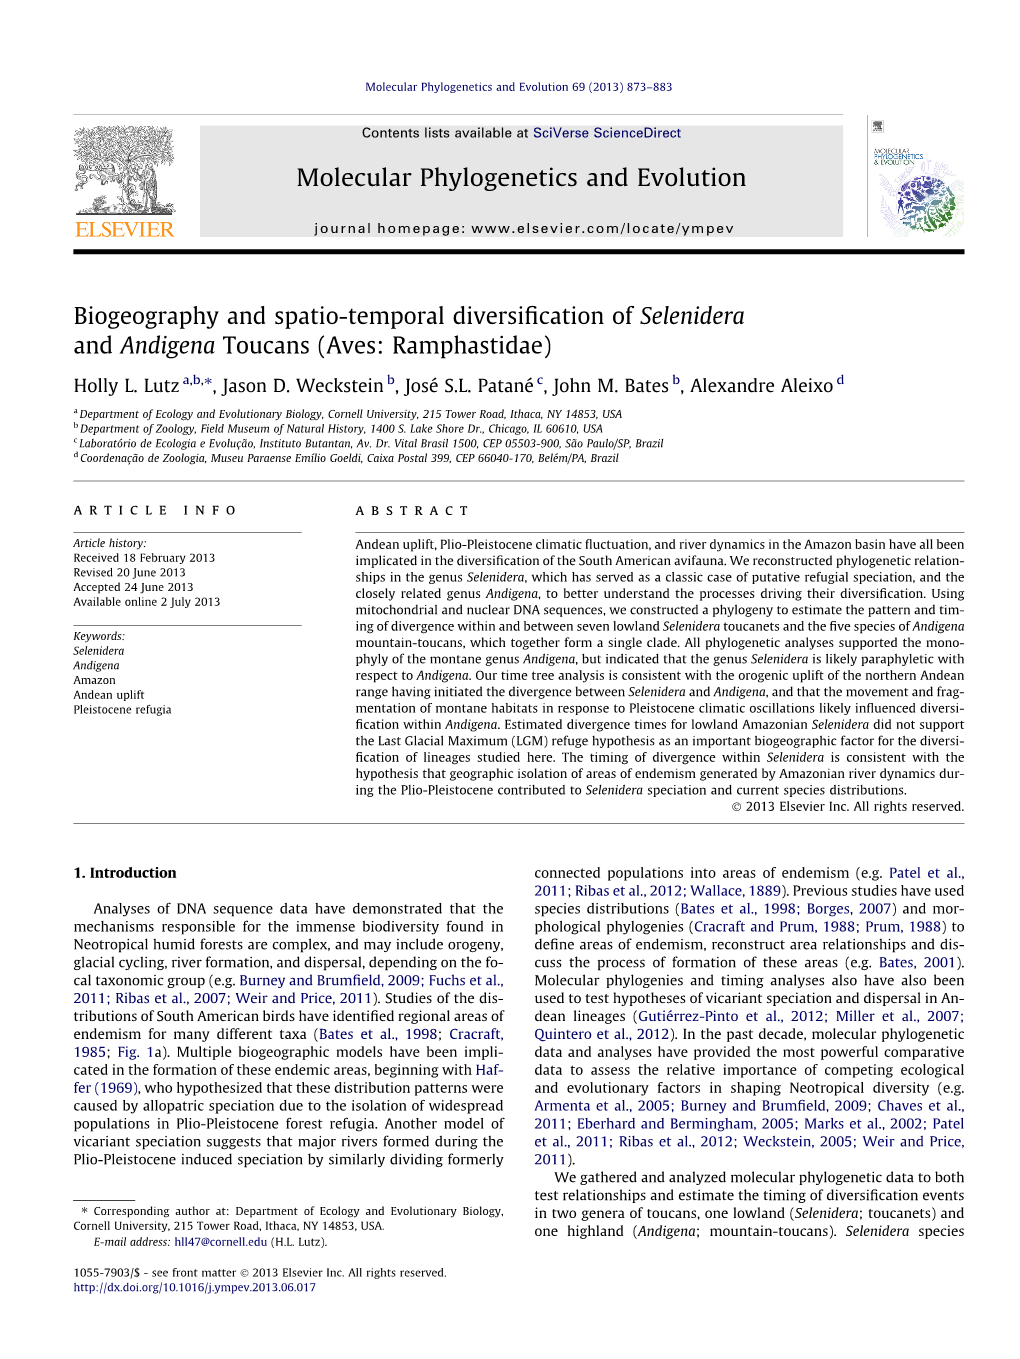 Biogeography and Spatio-Temporal Diversification of Selenidera And